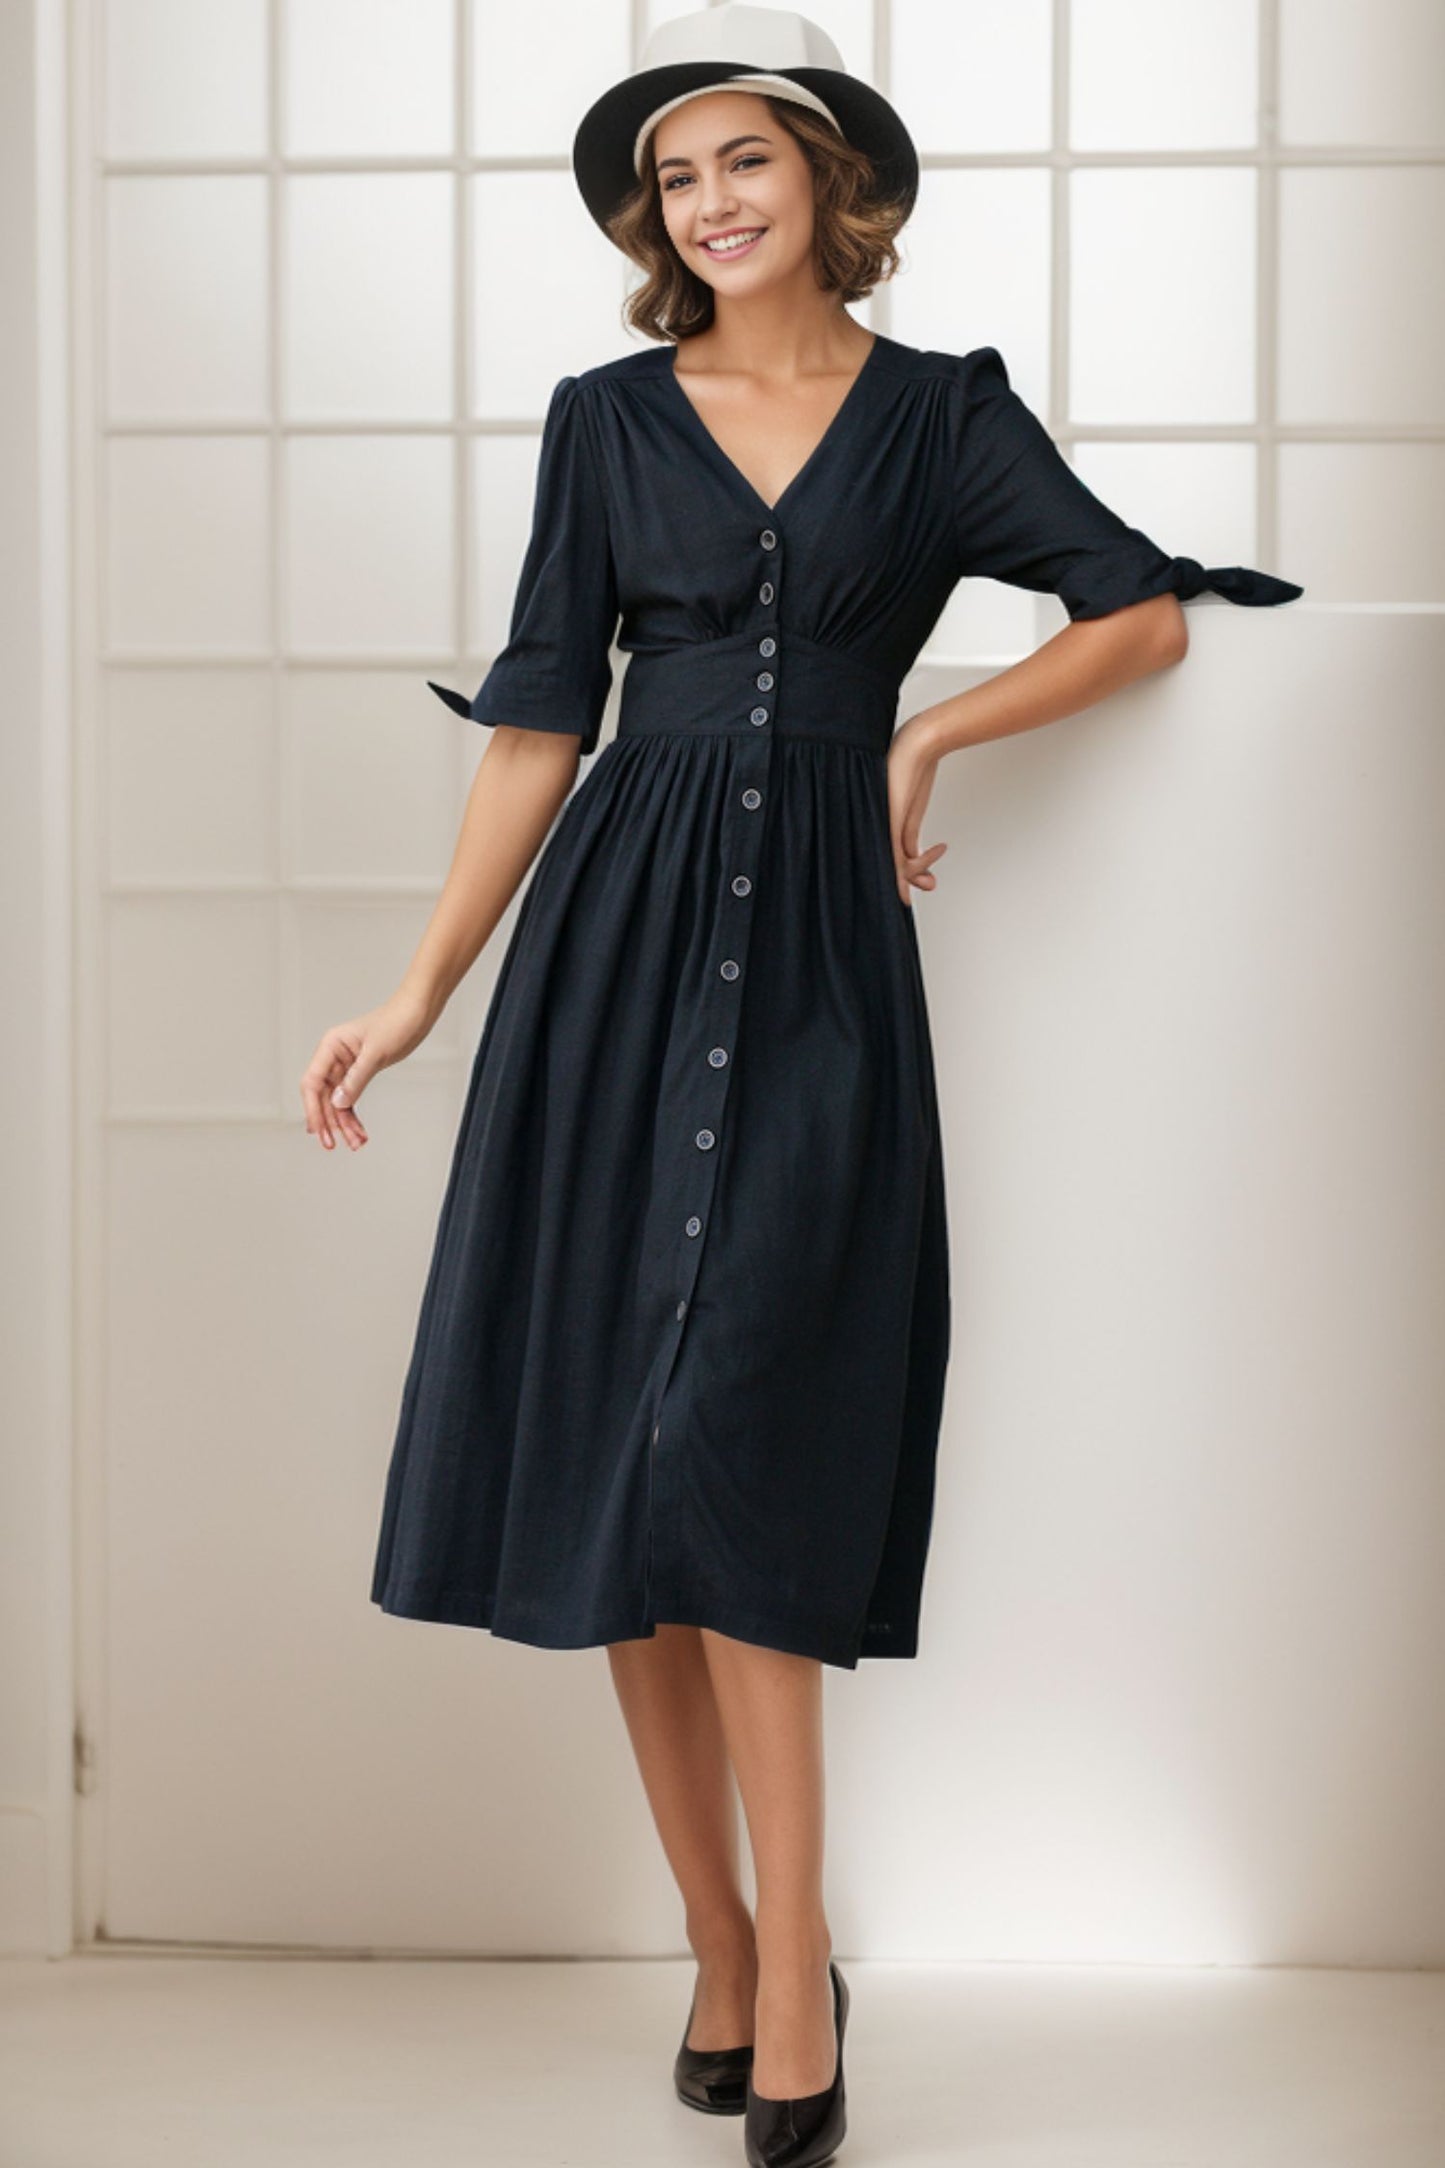 Black midi linen dress with V neckline 5129